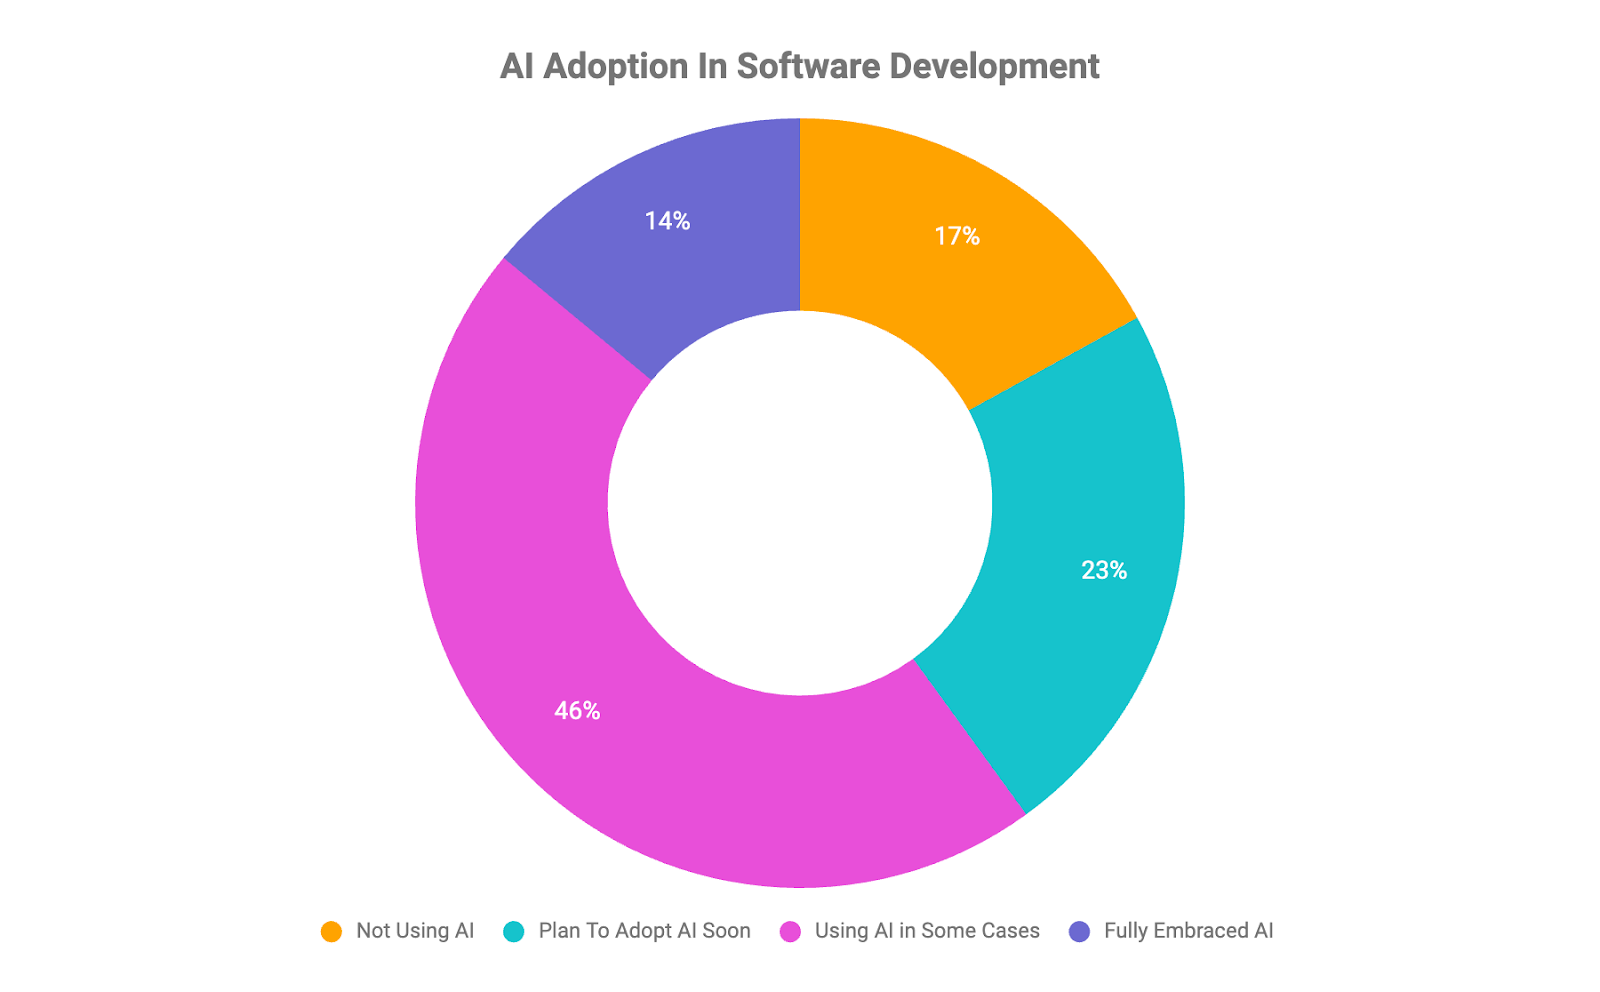 Pie chart showing AI adoption in software development 